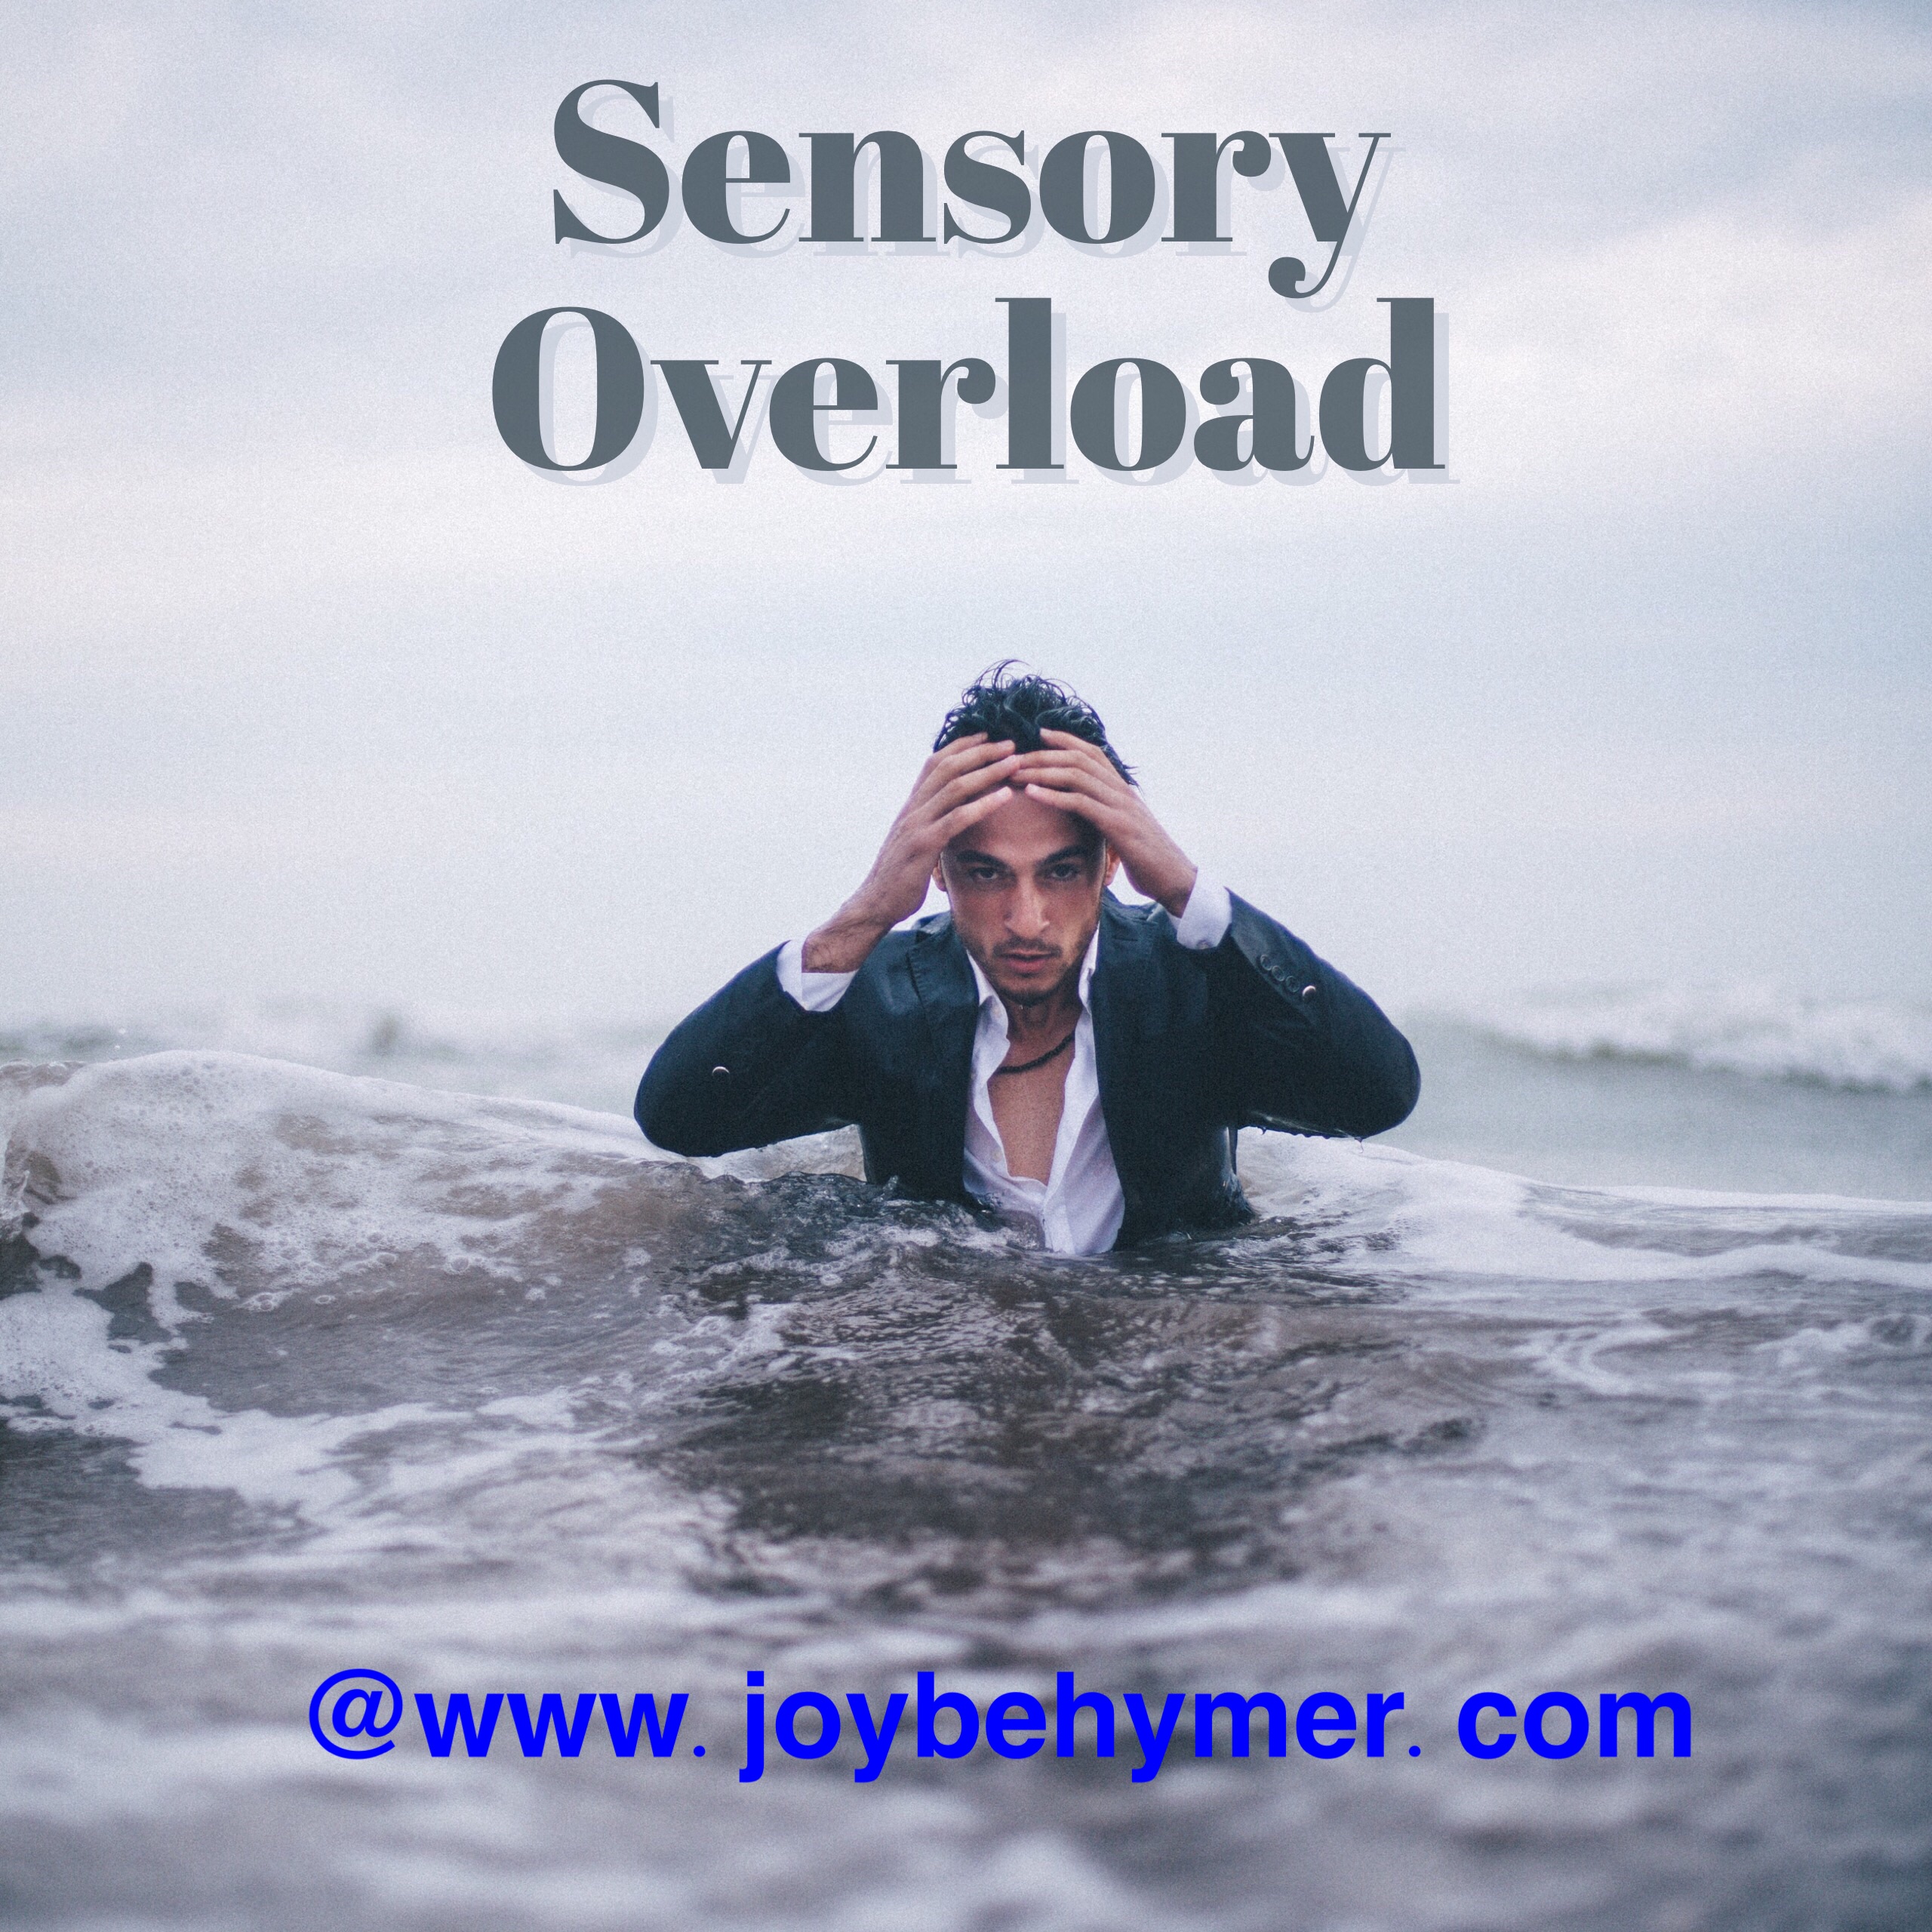 Sensory overload